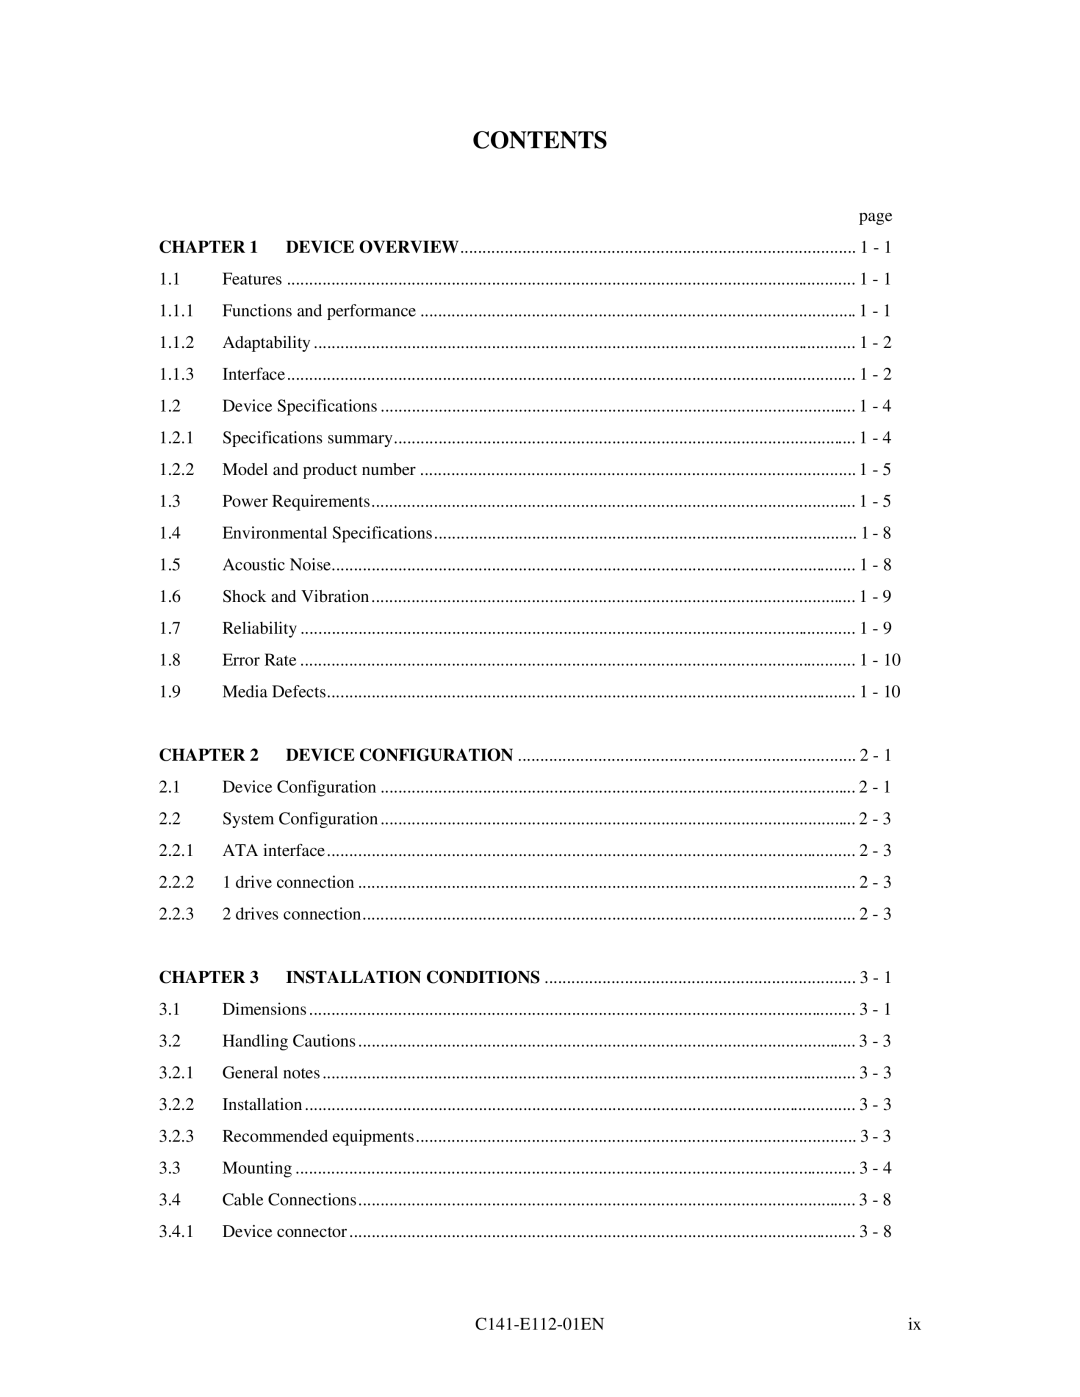 Fujitsu MPG3XXXAH manual Contents, Chapter 